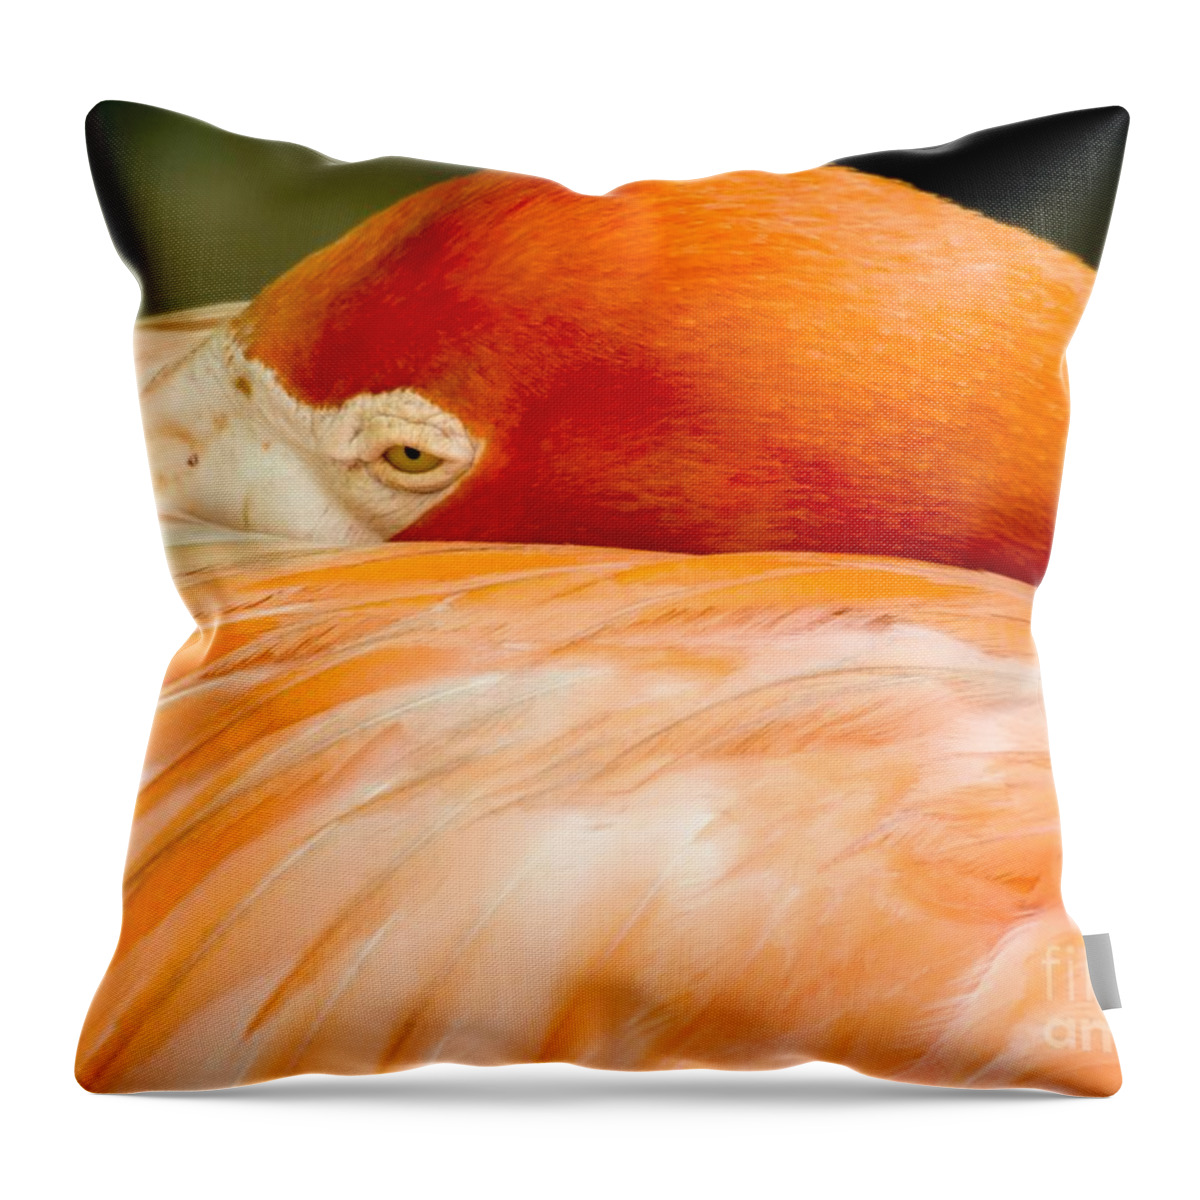 Flamingo Throw Pillow featuring the photograph Flamingo Napping by Sabrina L Ryan